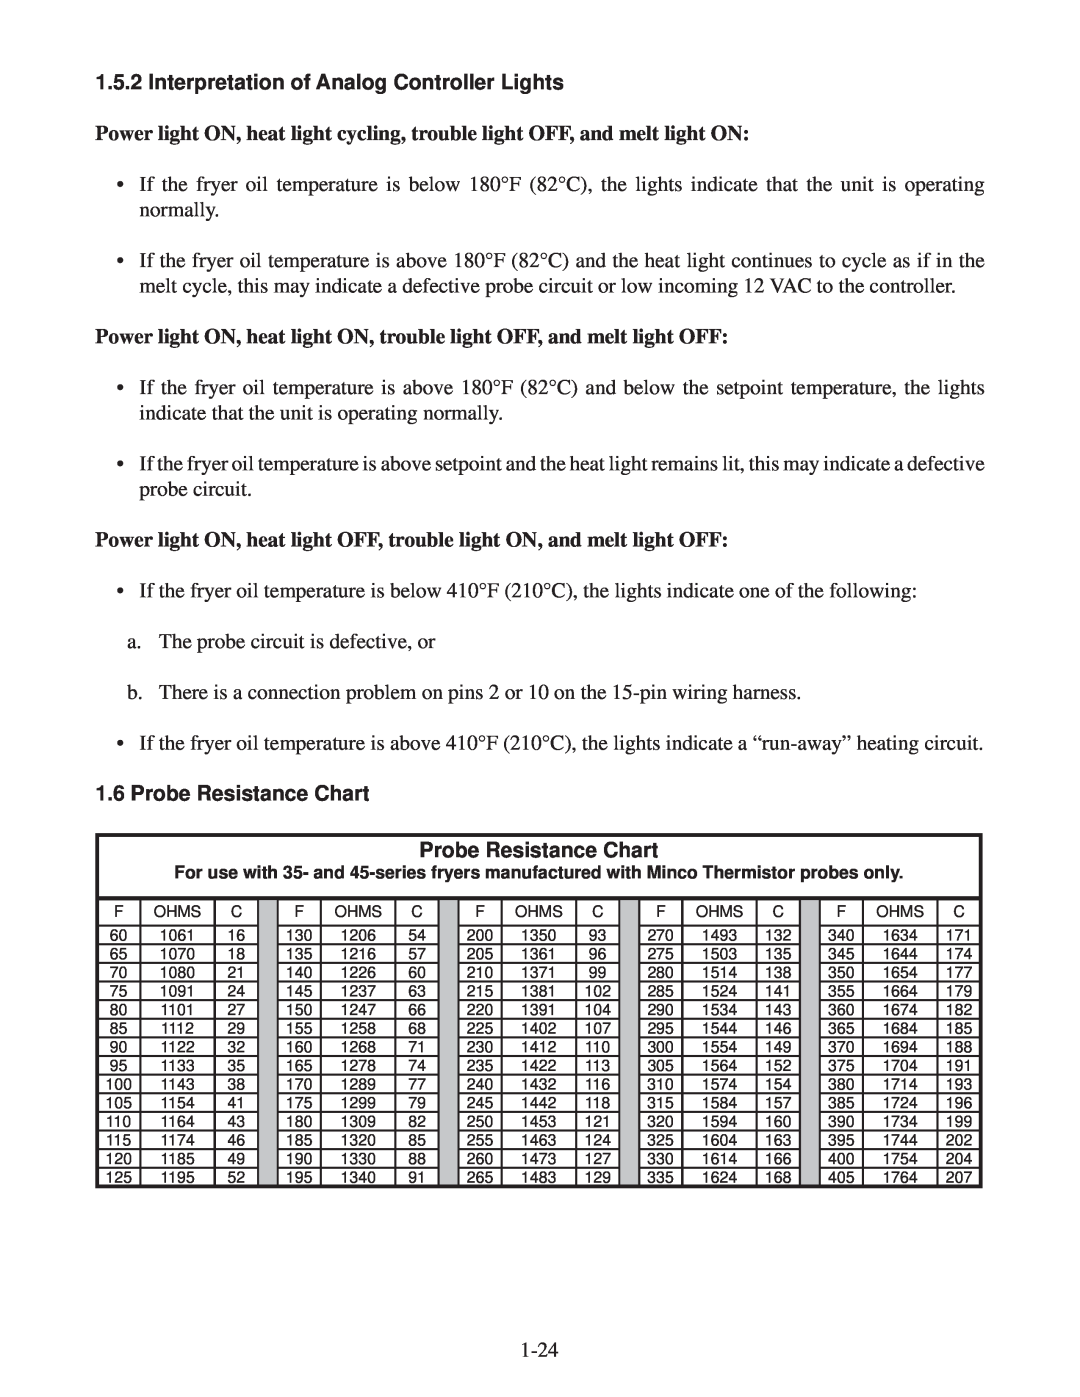 Frymaster 45, 35 manual Interpretation of Analog Controller Lights, Probe Resistance Chart Probe Resistance Chart 